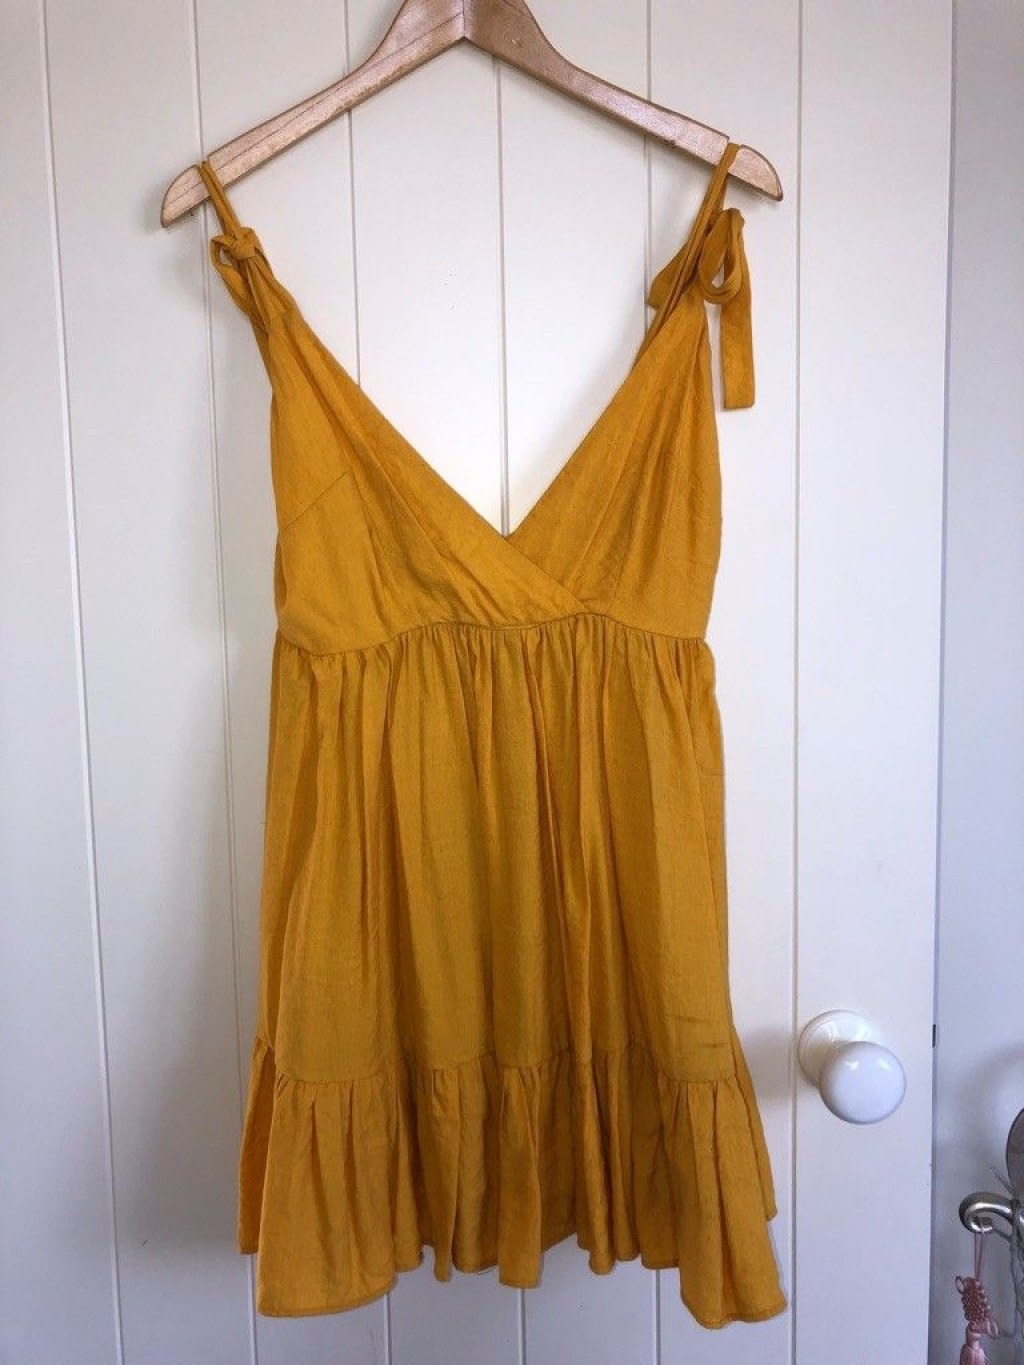 dolly girl fashion designer - Dolly Girl Fashion - Yellow/mustard dress on Designer Wardrobe